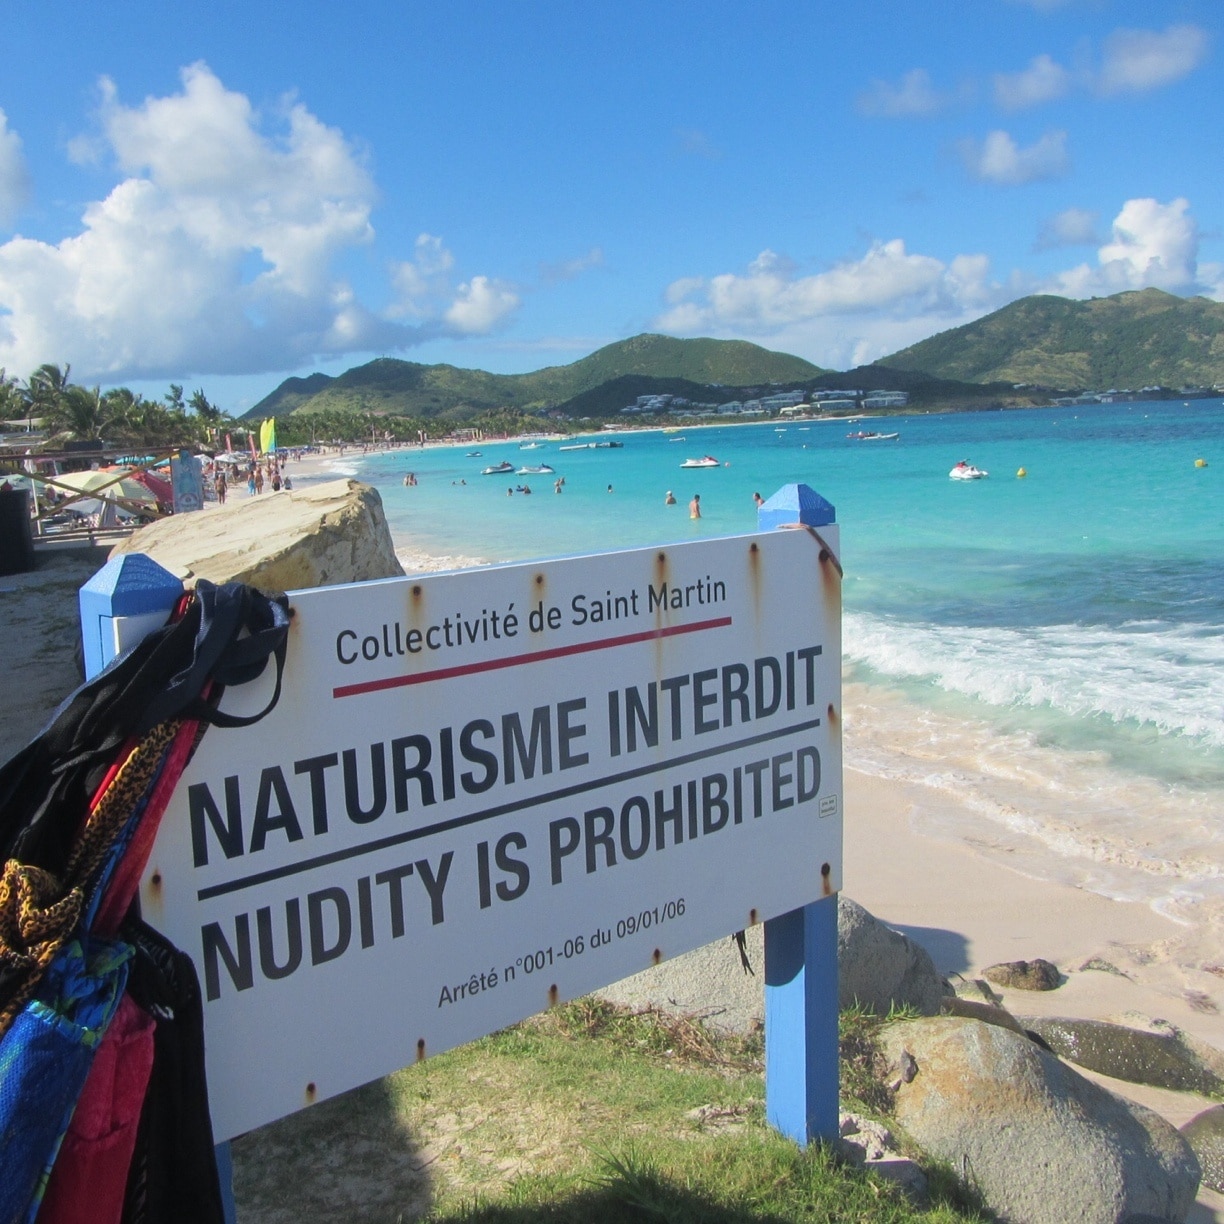 alvaro vera recommends St Martin Nudist Resort